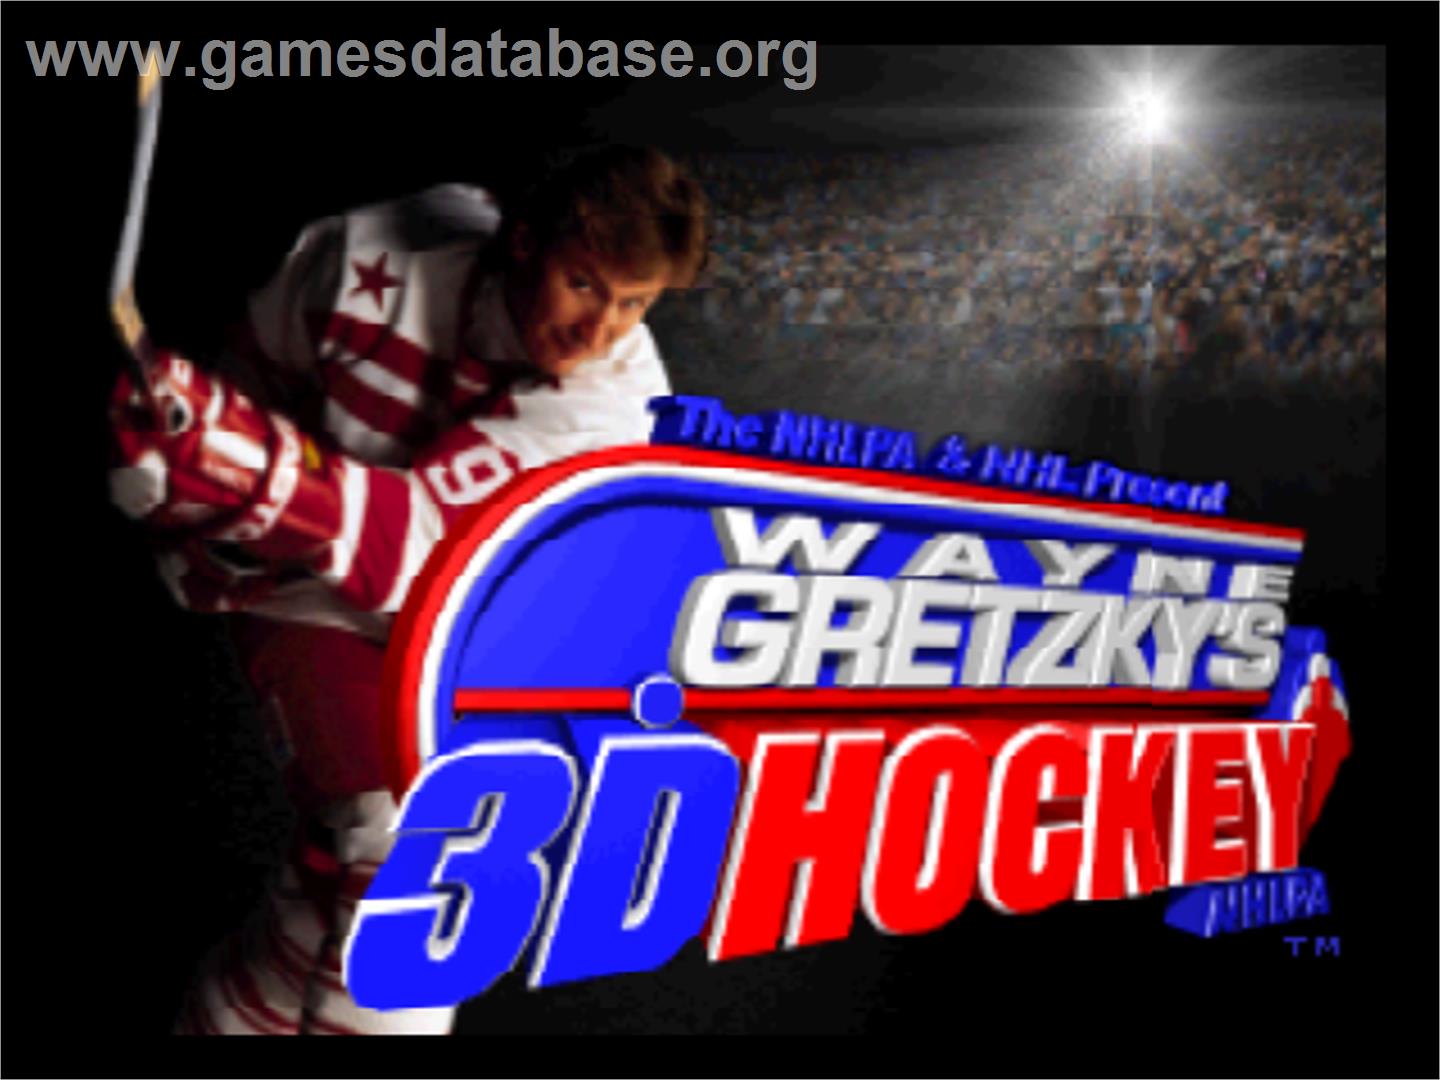 Wayne Gretzky's 3D Hockey - Nintendo N64 - Artwork - Title Screen